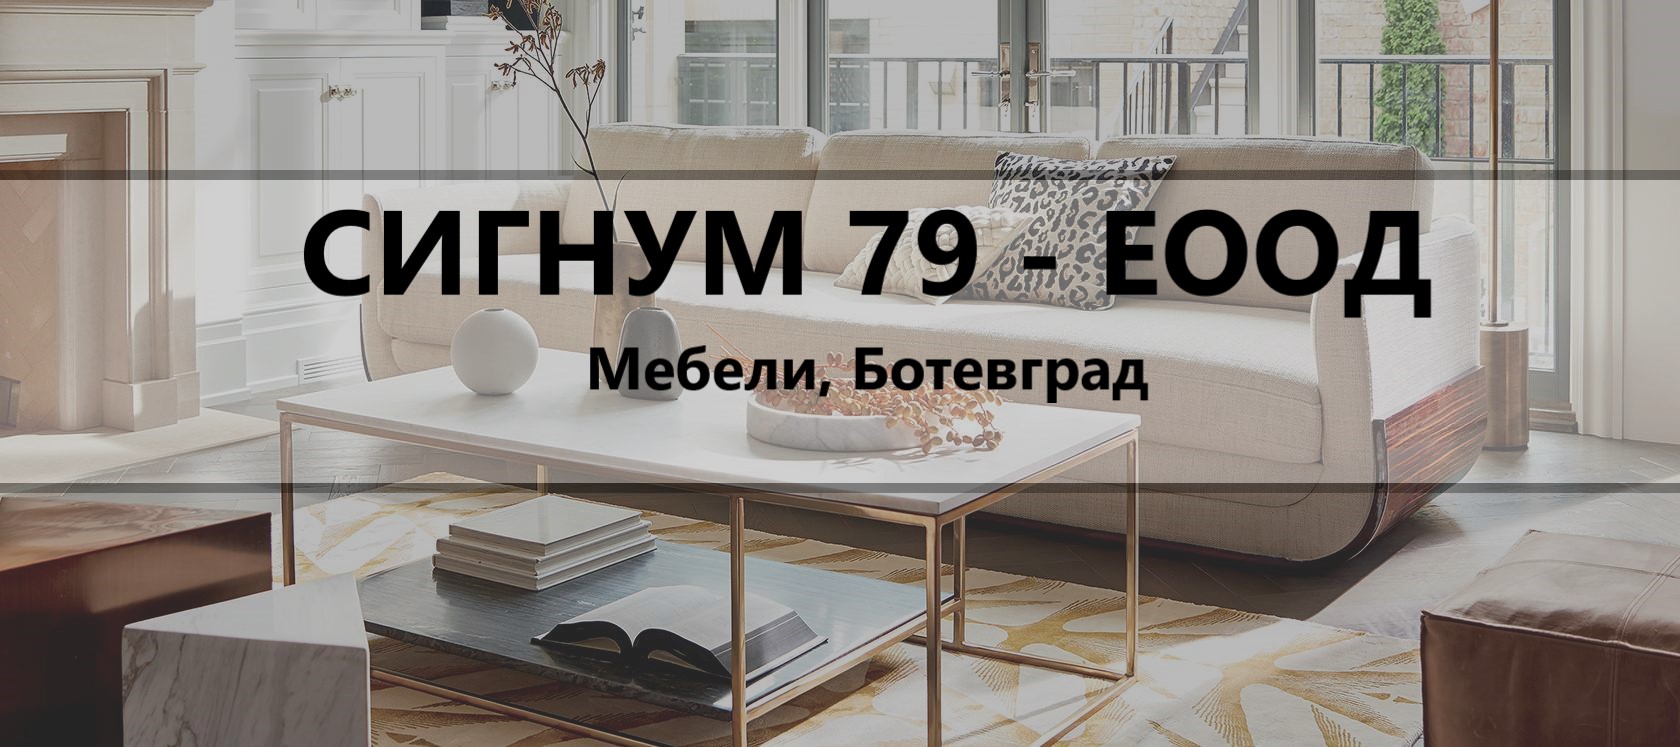 Image for "СИГНУМ 79 " ЕООД | Мебели, Ботевград